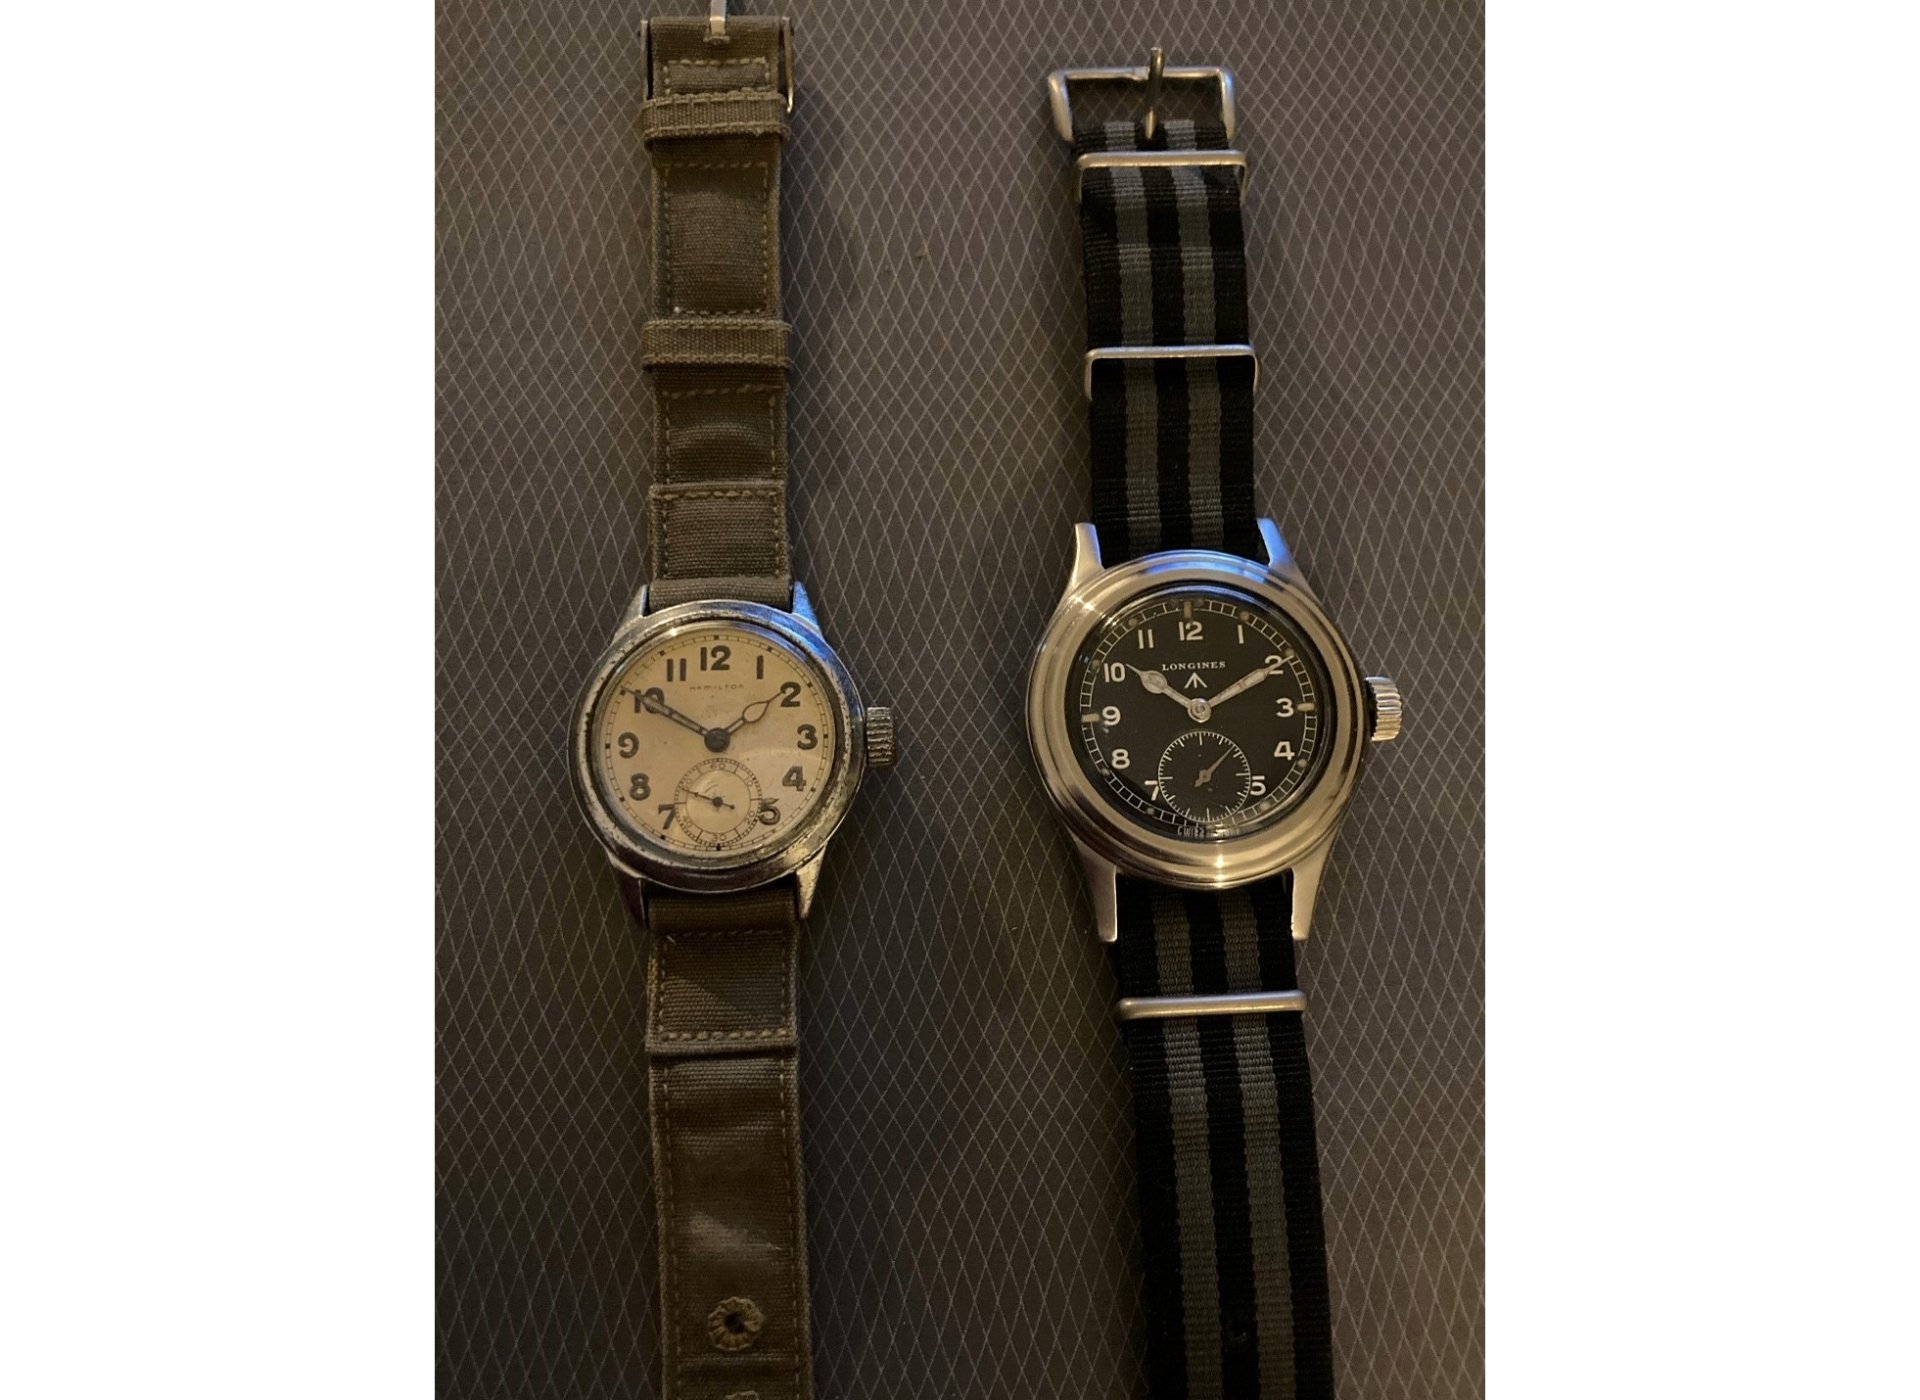 A Hamilton Ordnance watch, left, and a Longines WWW